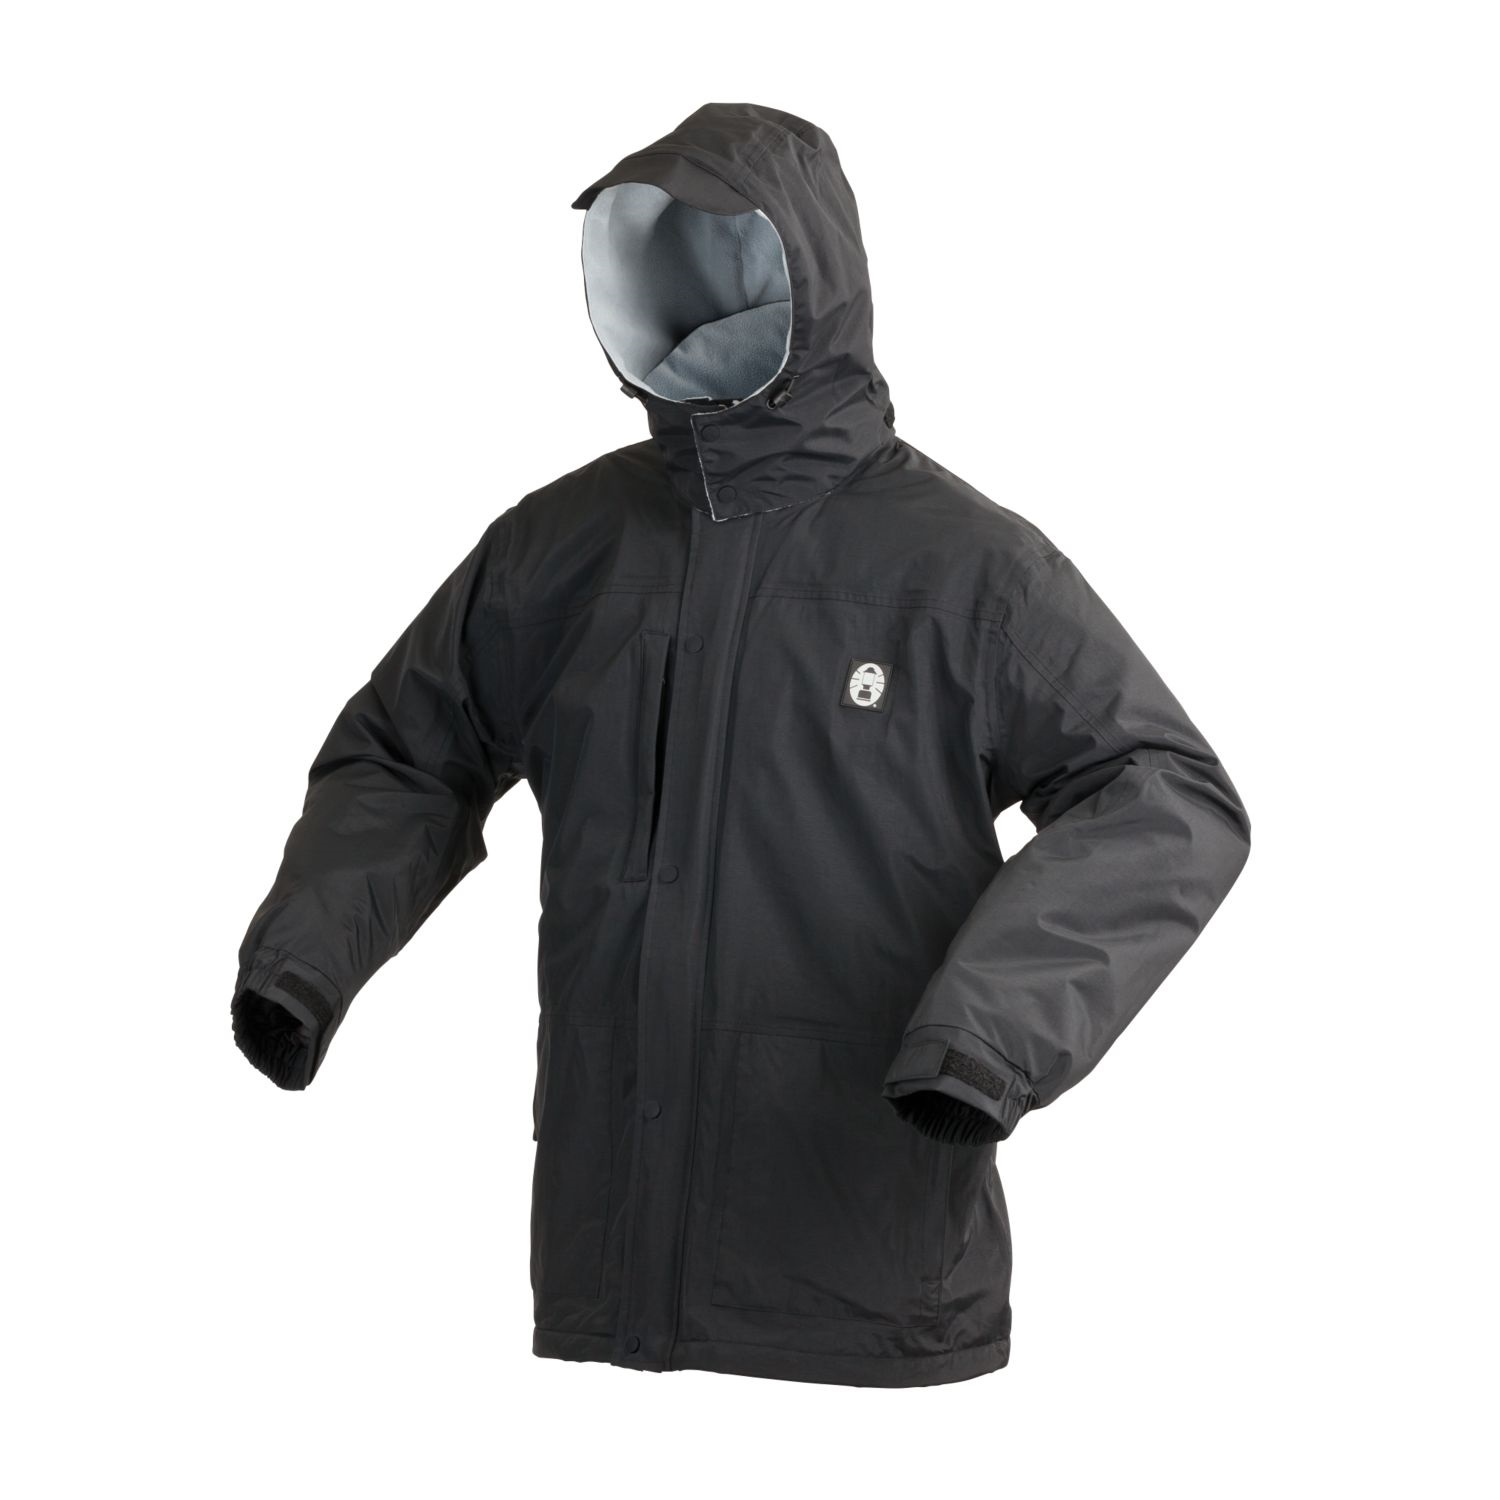 Coleman Apparel Fleece Lined Black Jacket 2xl - 2000014386